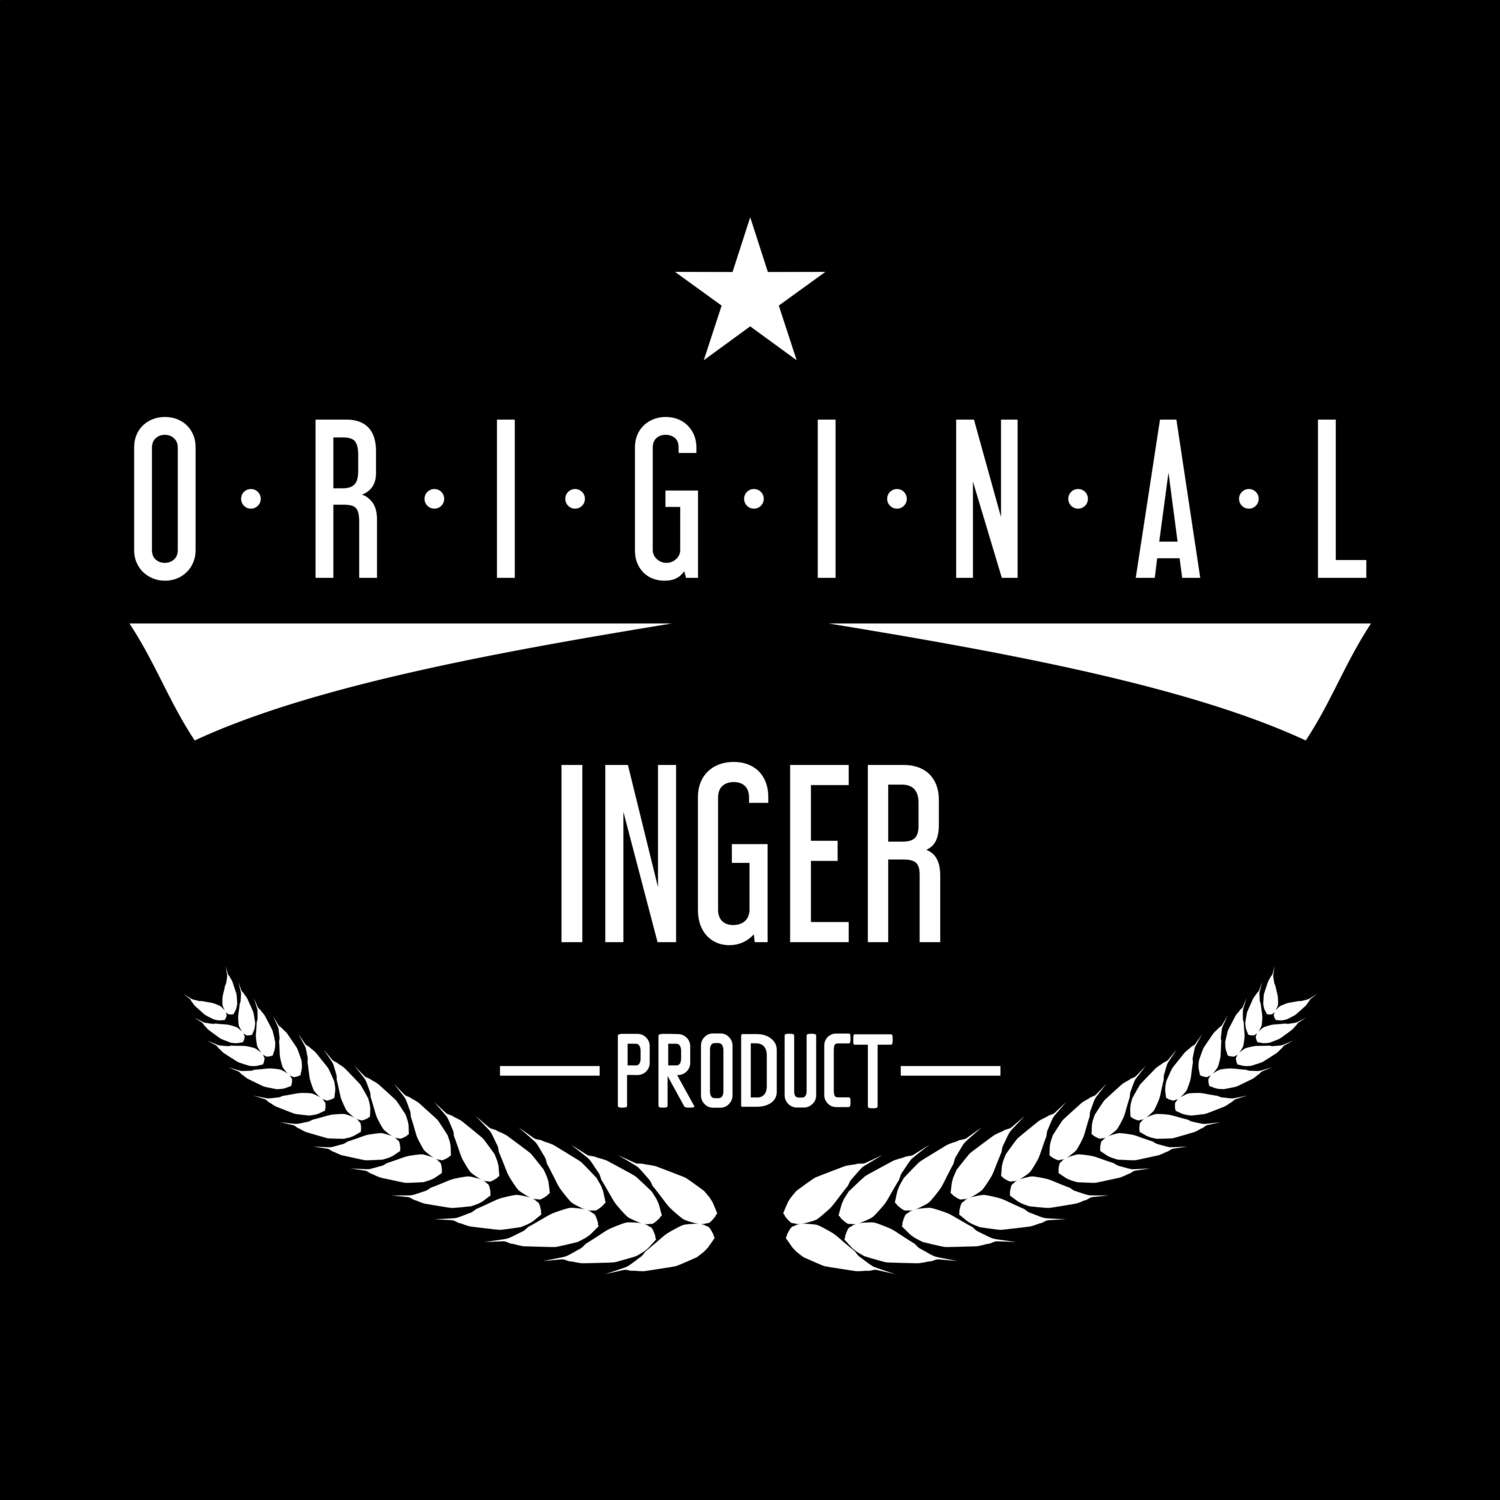 Inger T-Shirt »Original Product«